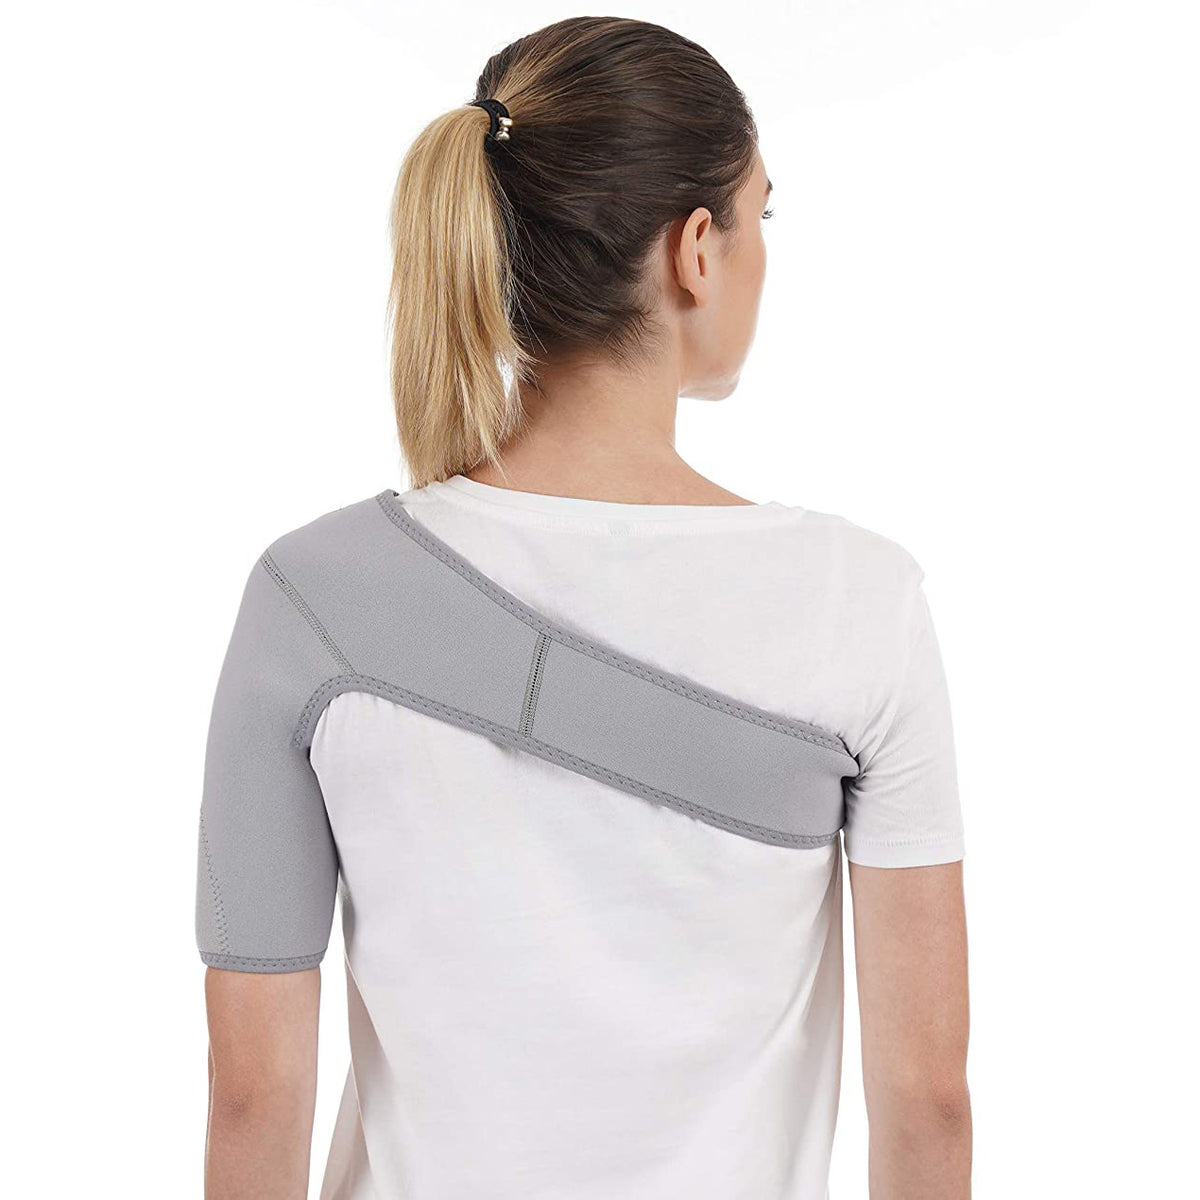 shoulder-support-neoprene-6